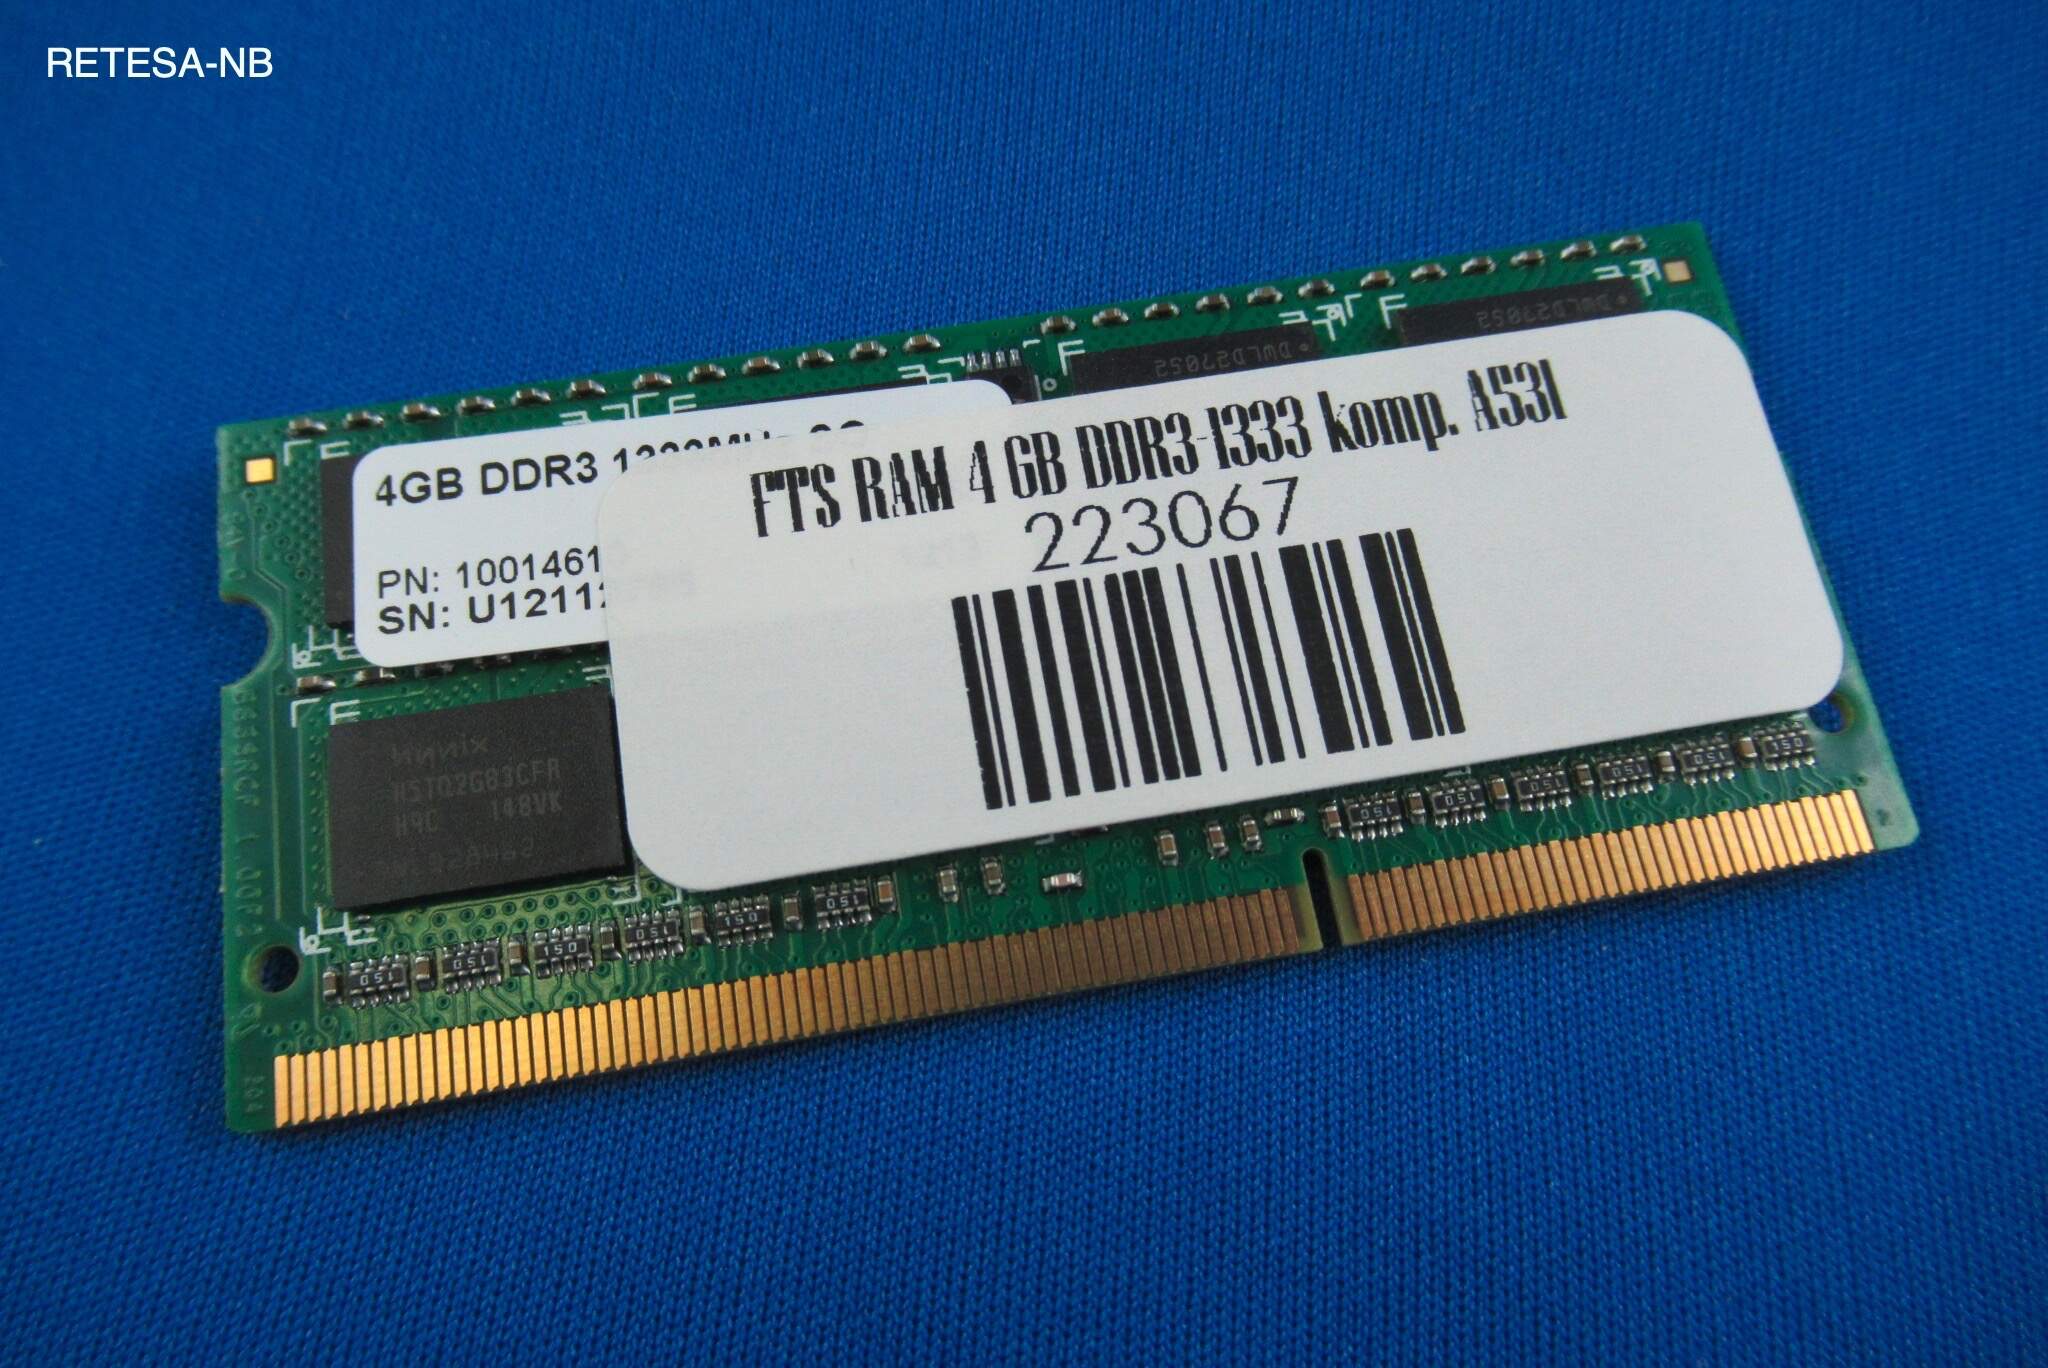 FTS DDR3-RAM 4GB PC1333 SoDIMM COMPURAM CRM4096D3/FTSMF483